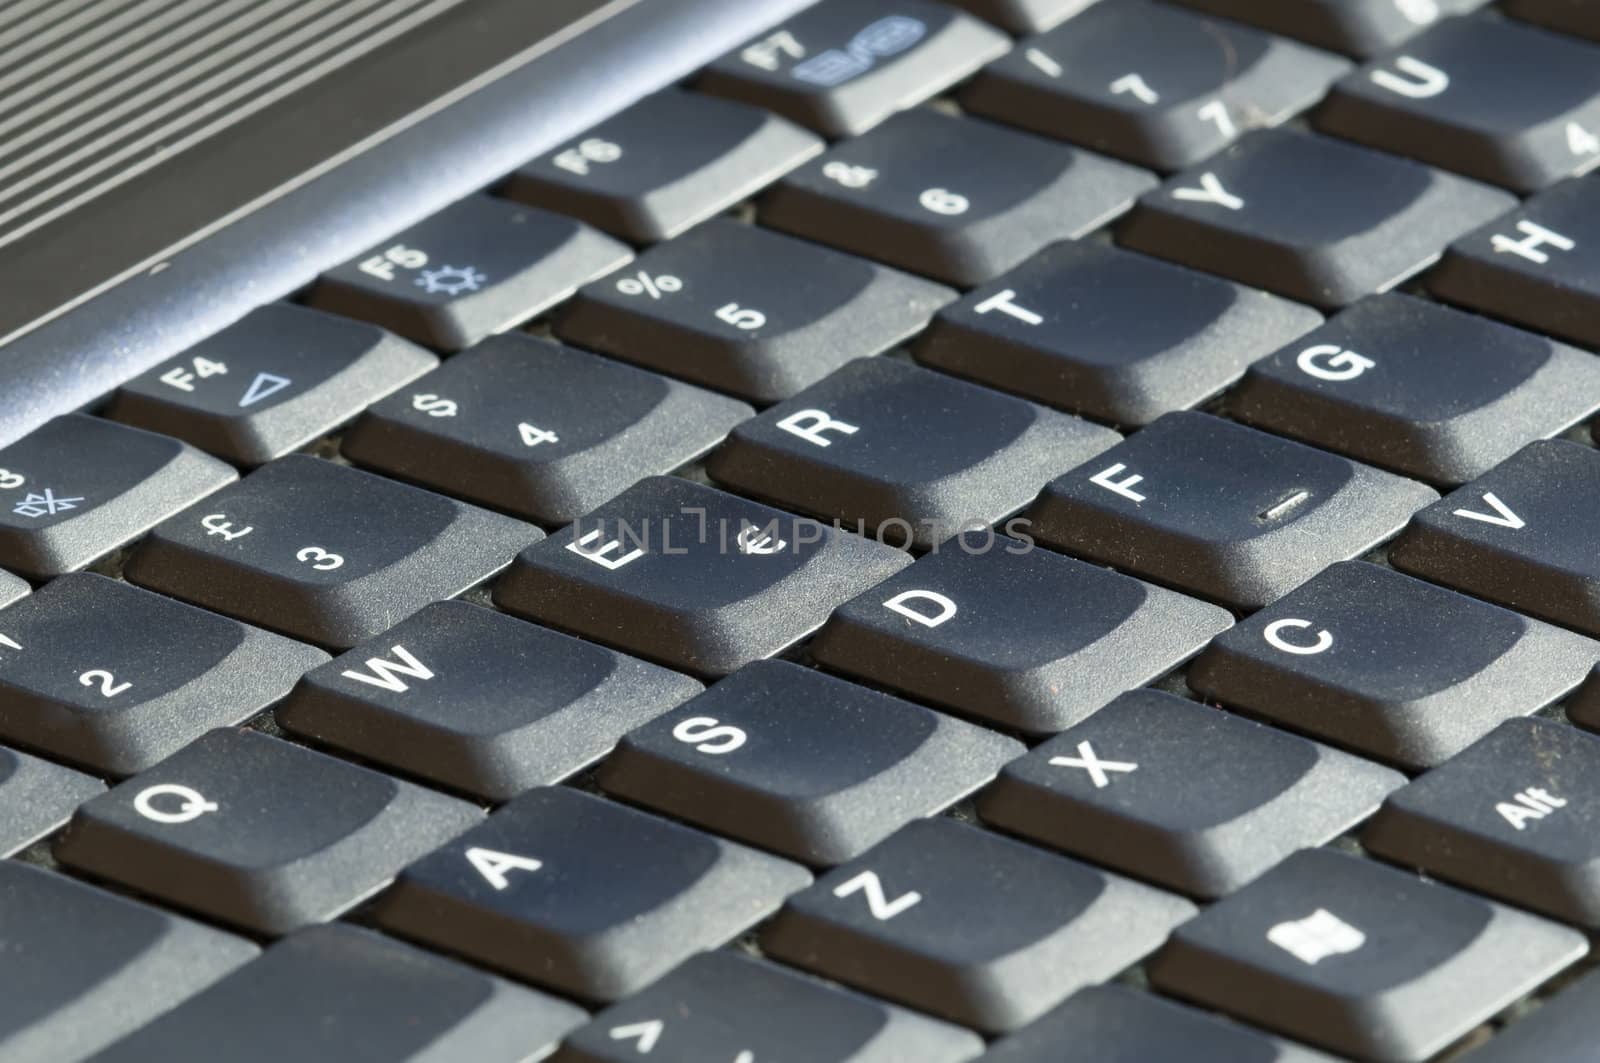 Closeup of a grey keyboard of a computer